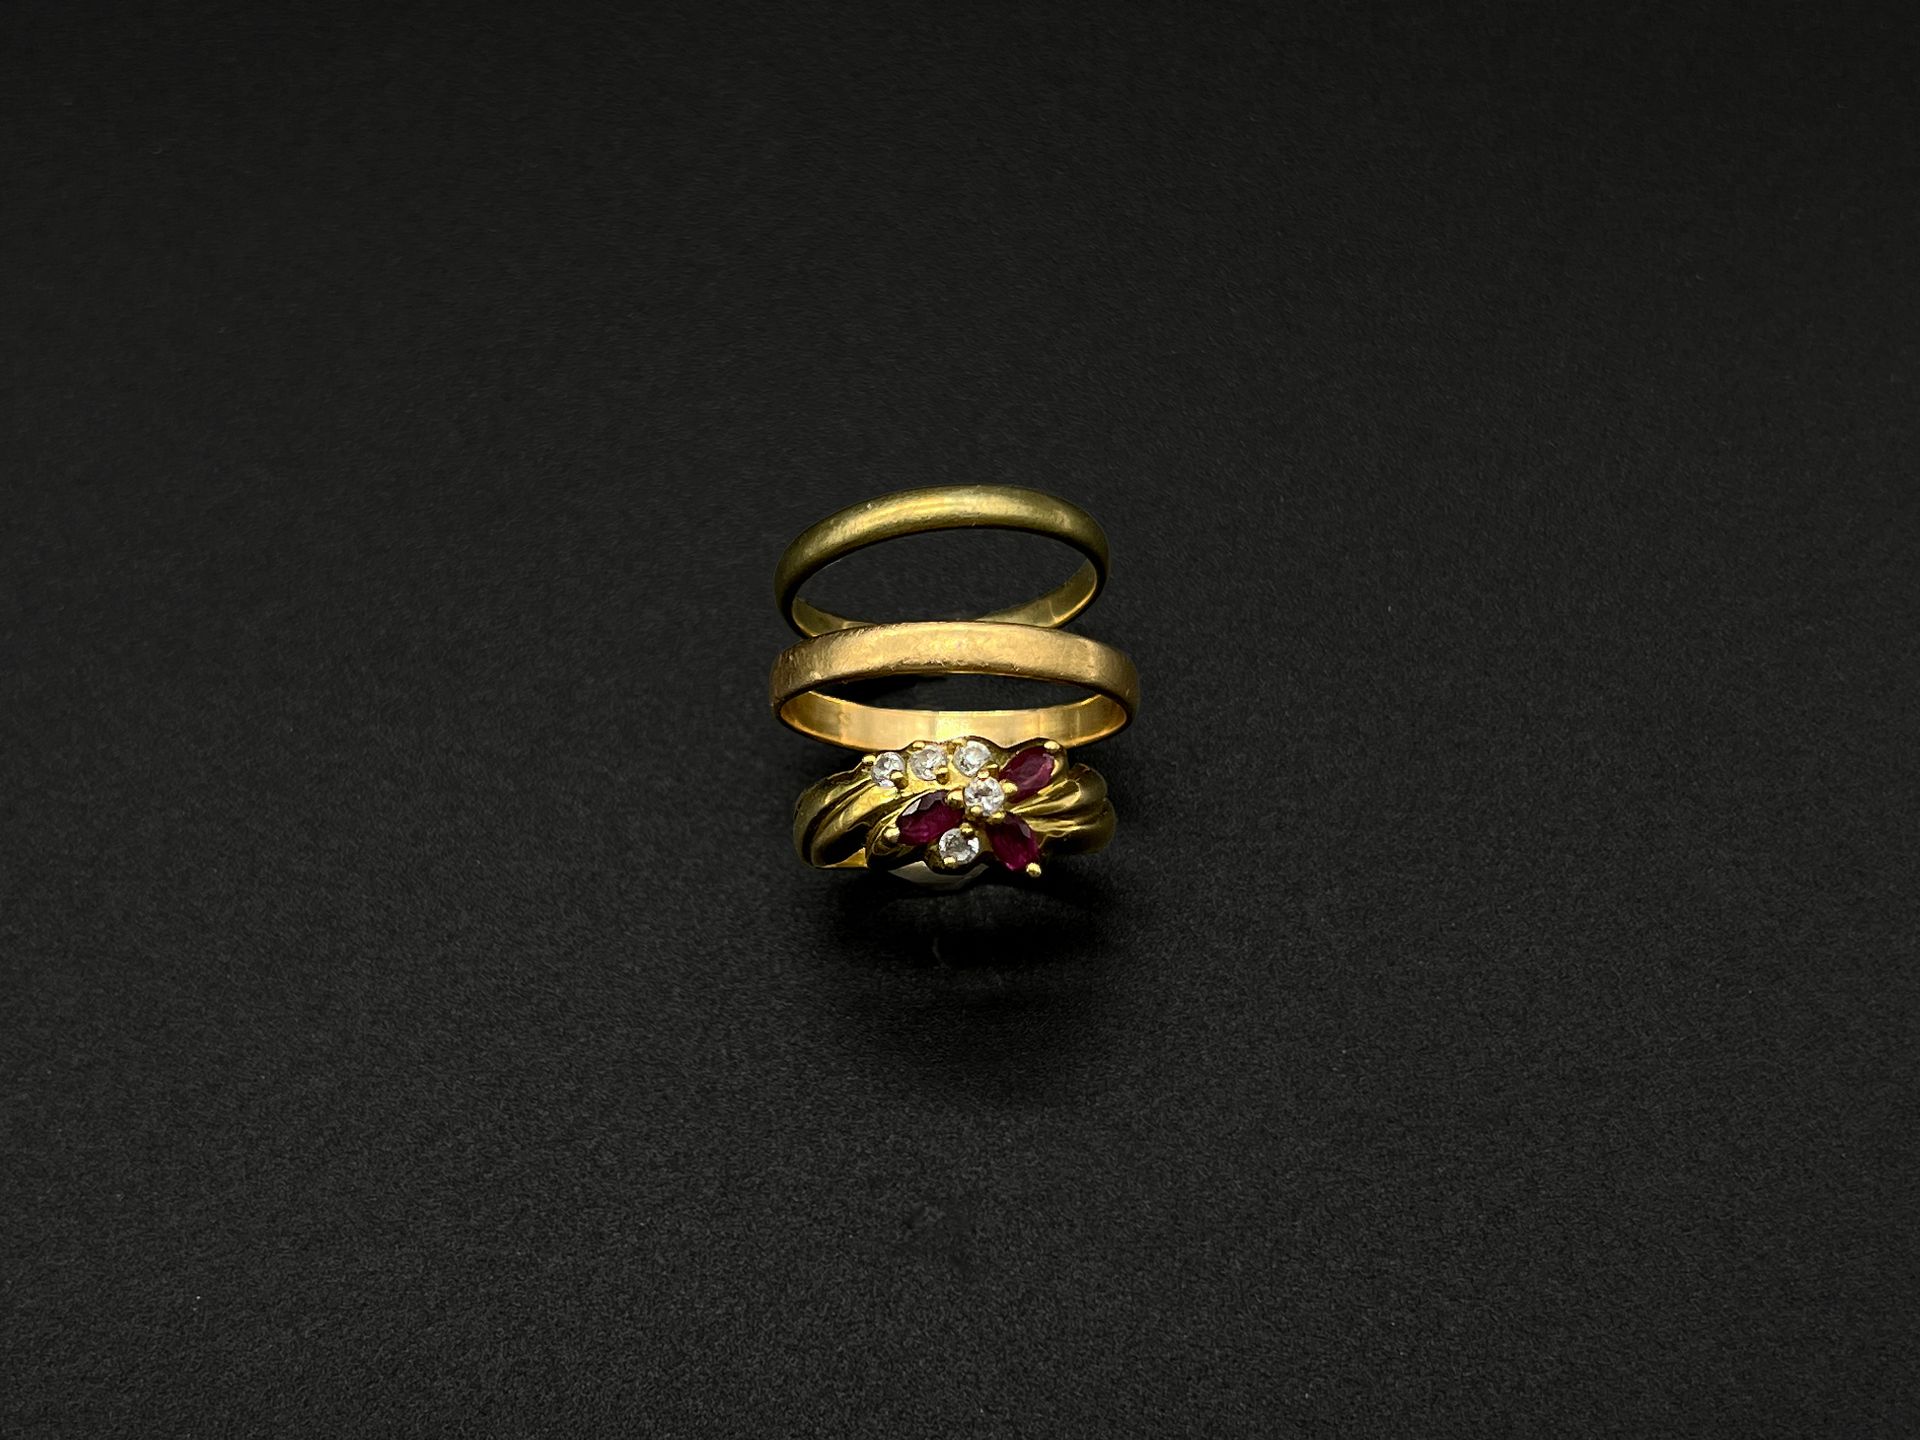 Null 一批戒指包括:

- 两个黄金（750）结婚戒指。

总重量：4克。

- 一枚黄金（750）戒指，装饰有粉色和白色宝石的造型花。

毛重：2.4克。